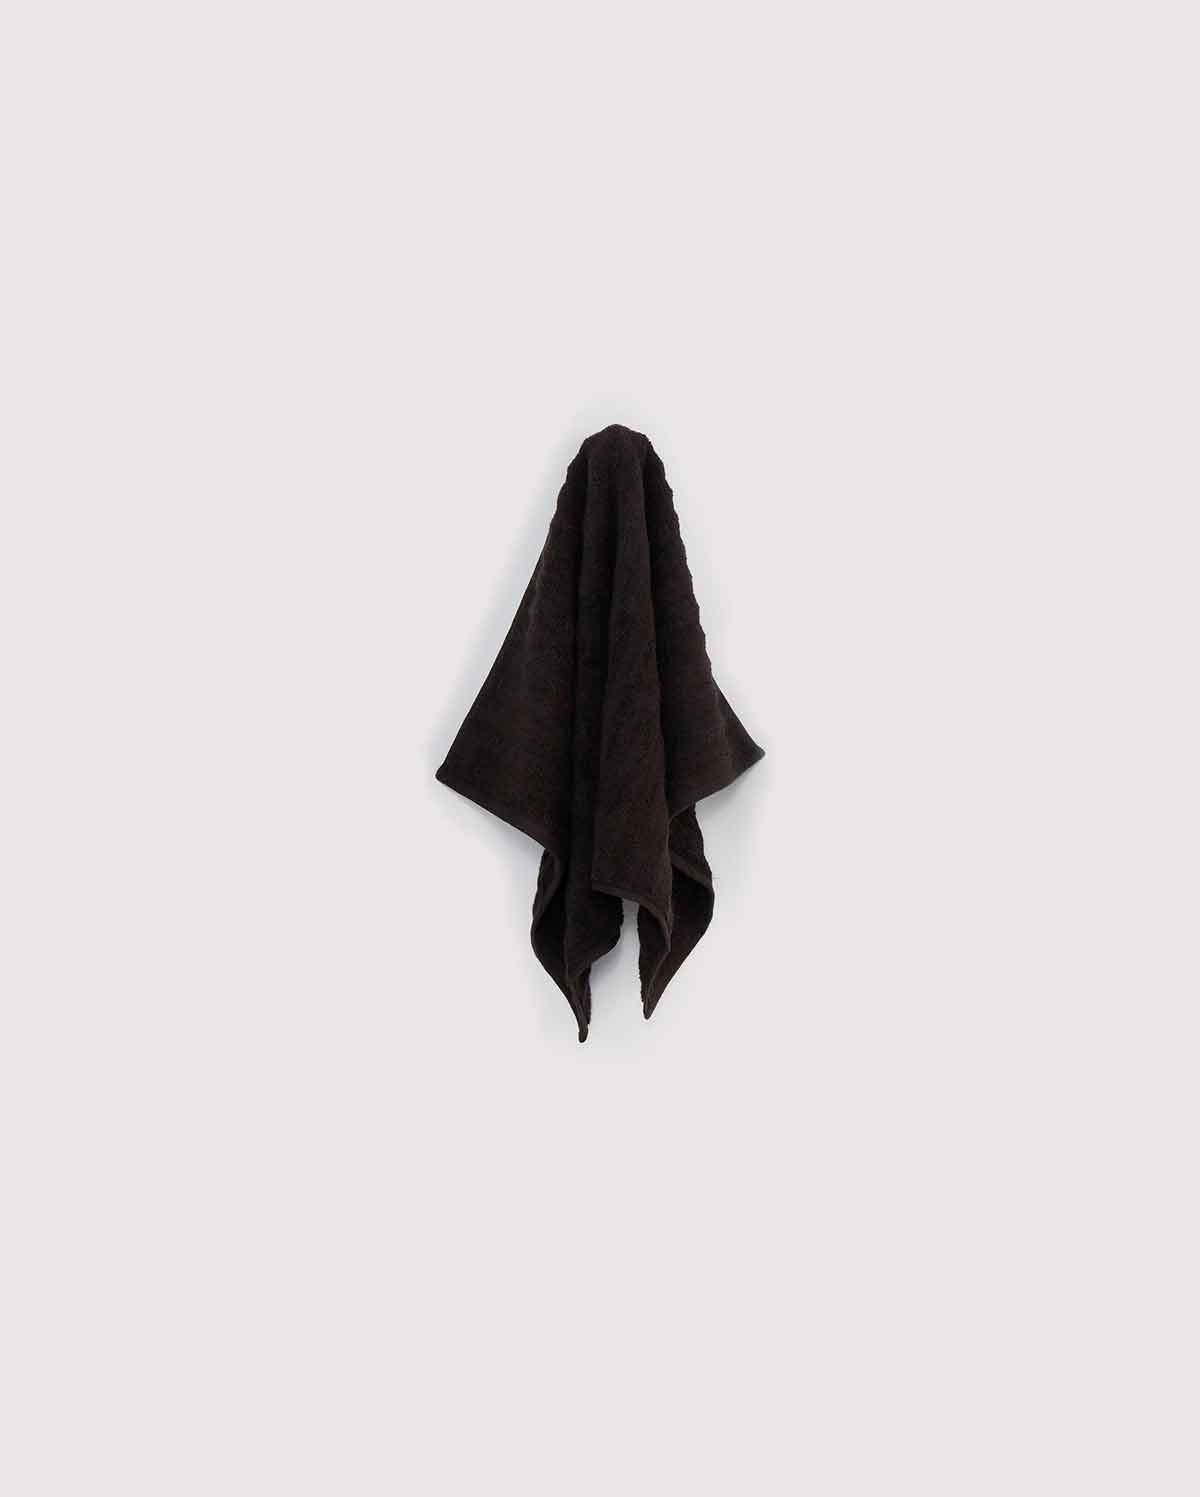 Ribbed Soft Cotton Towel Set - Black (3 Towels)